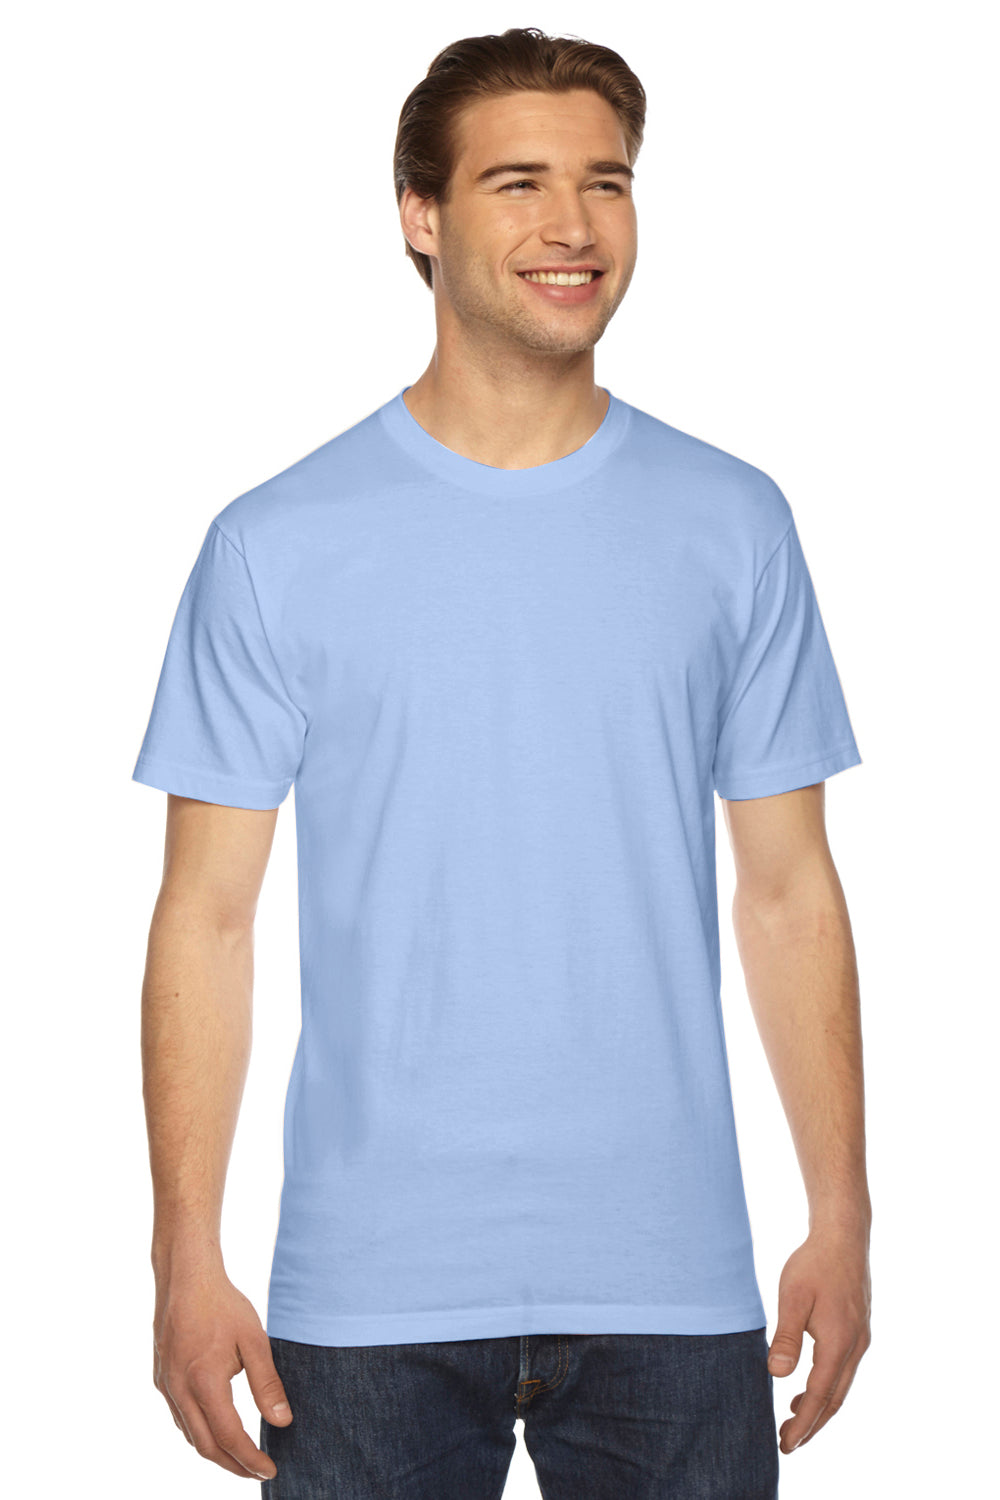 American Apparel 2001 Mens USA Made Fine Jersey Short Sleeve Crewneck T-Shirt Baby Blue Front